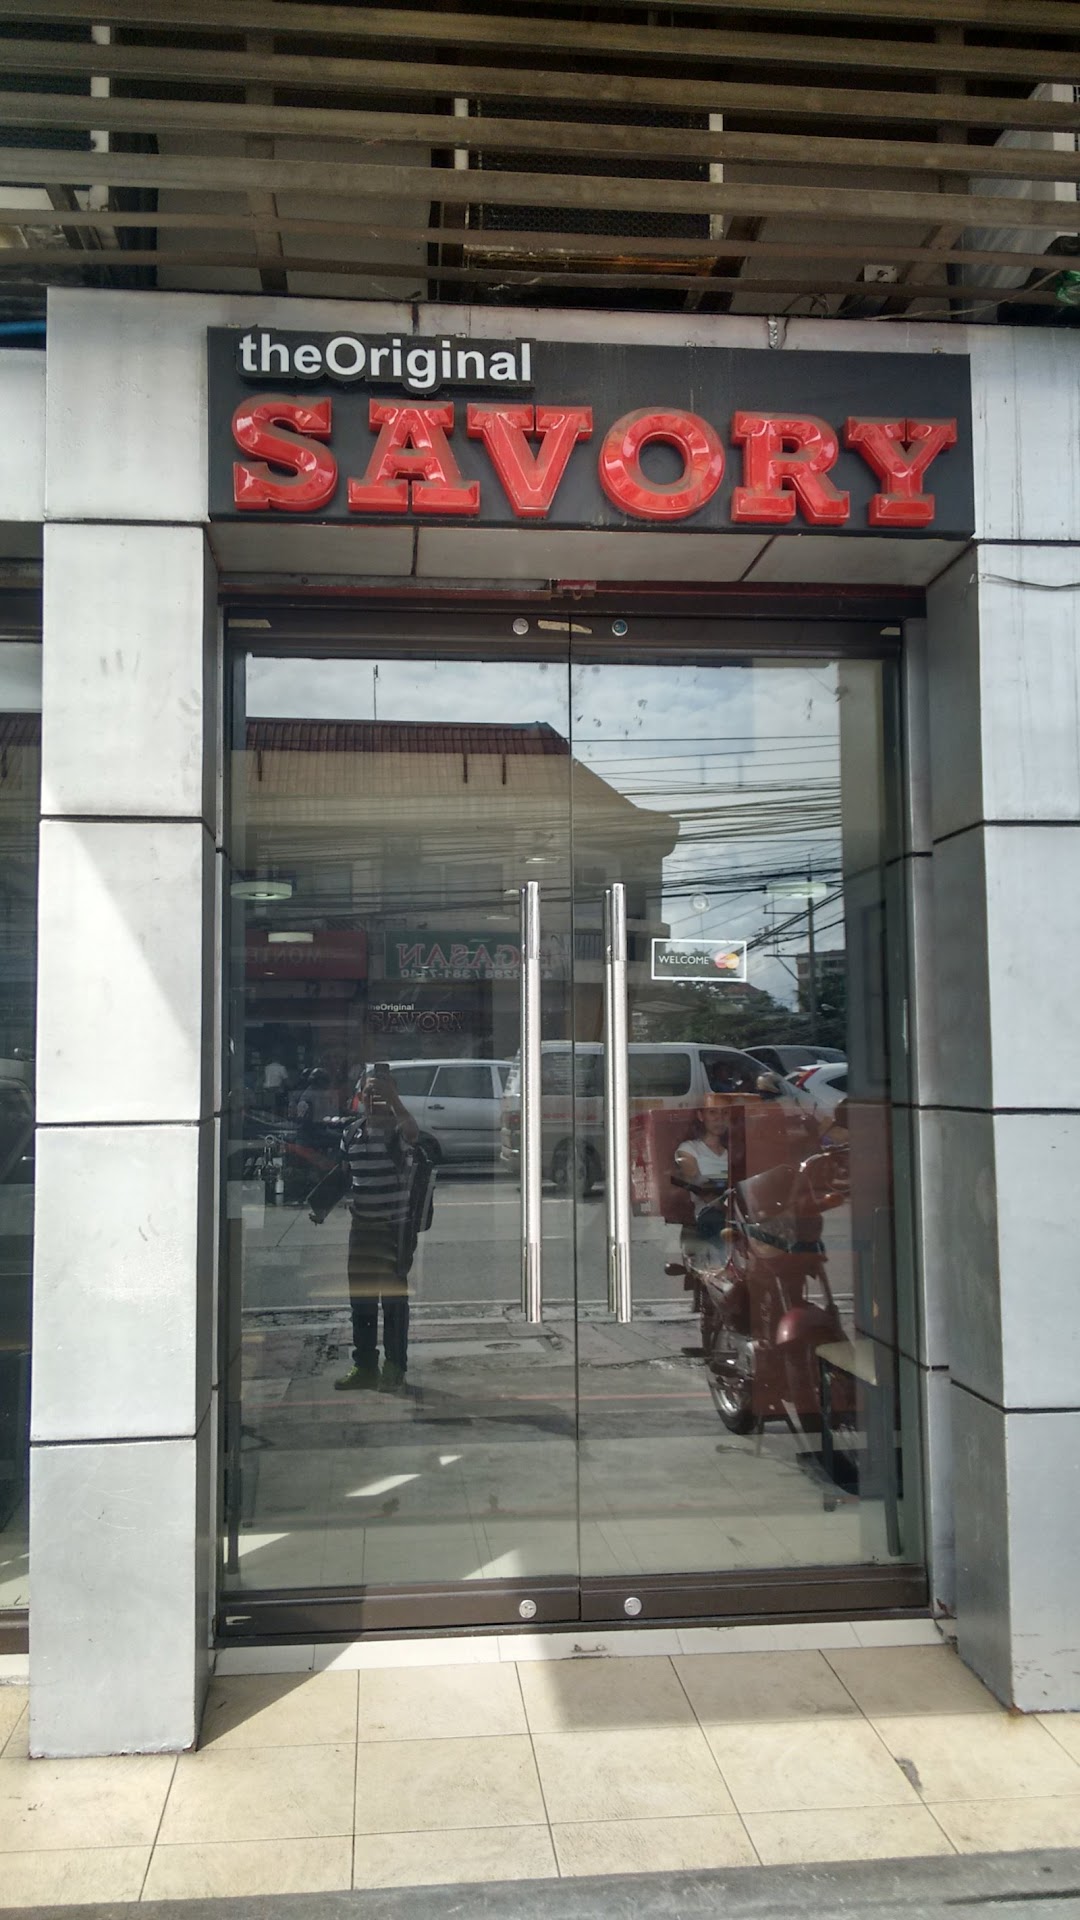 The Original Savory